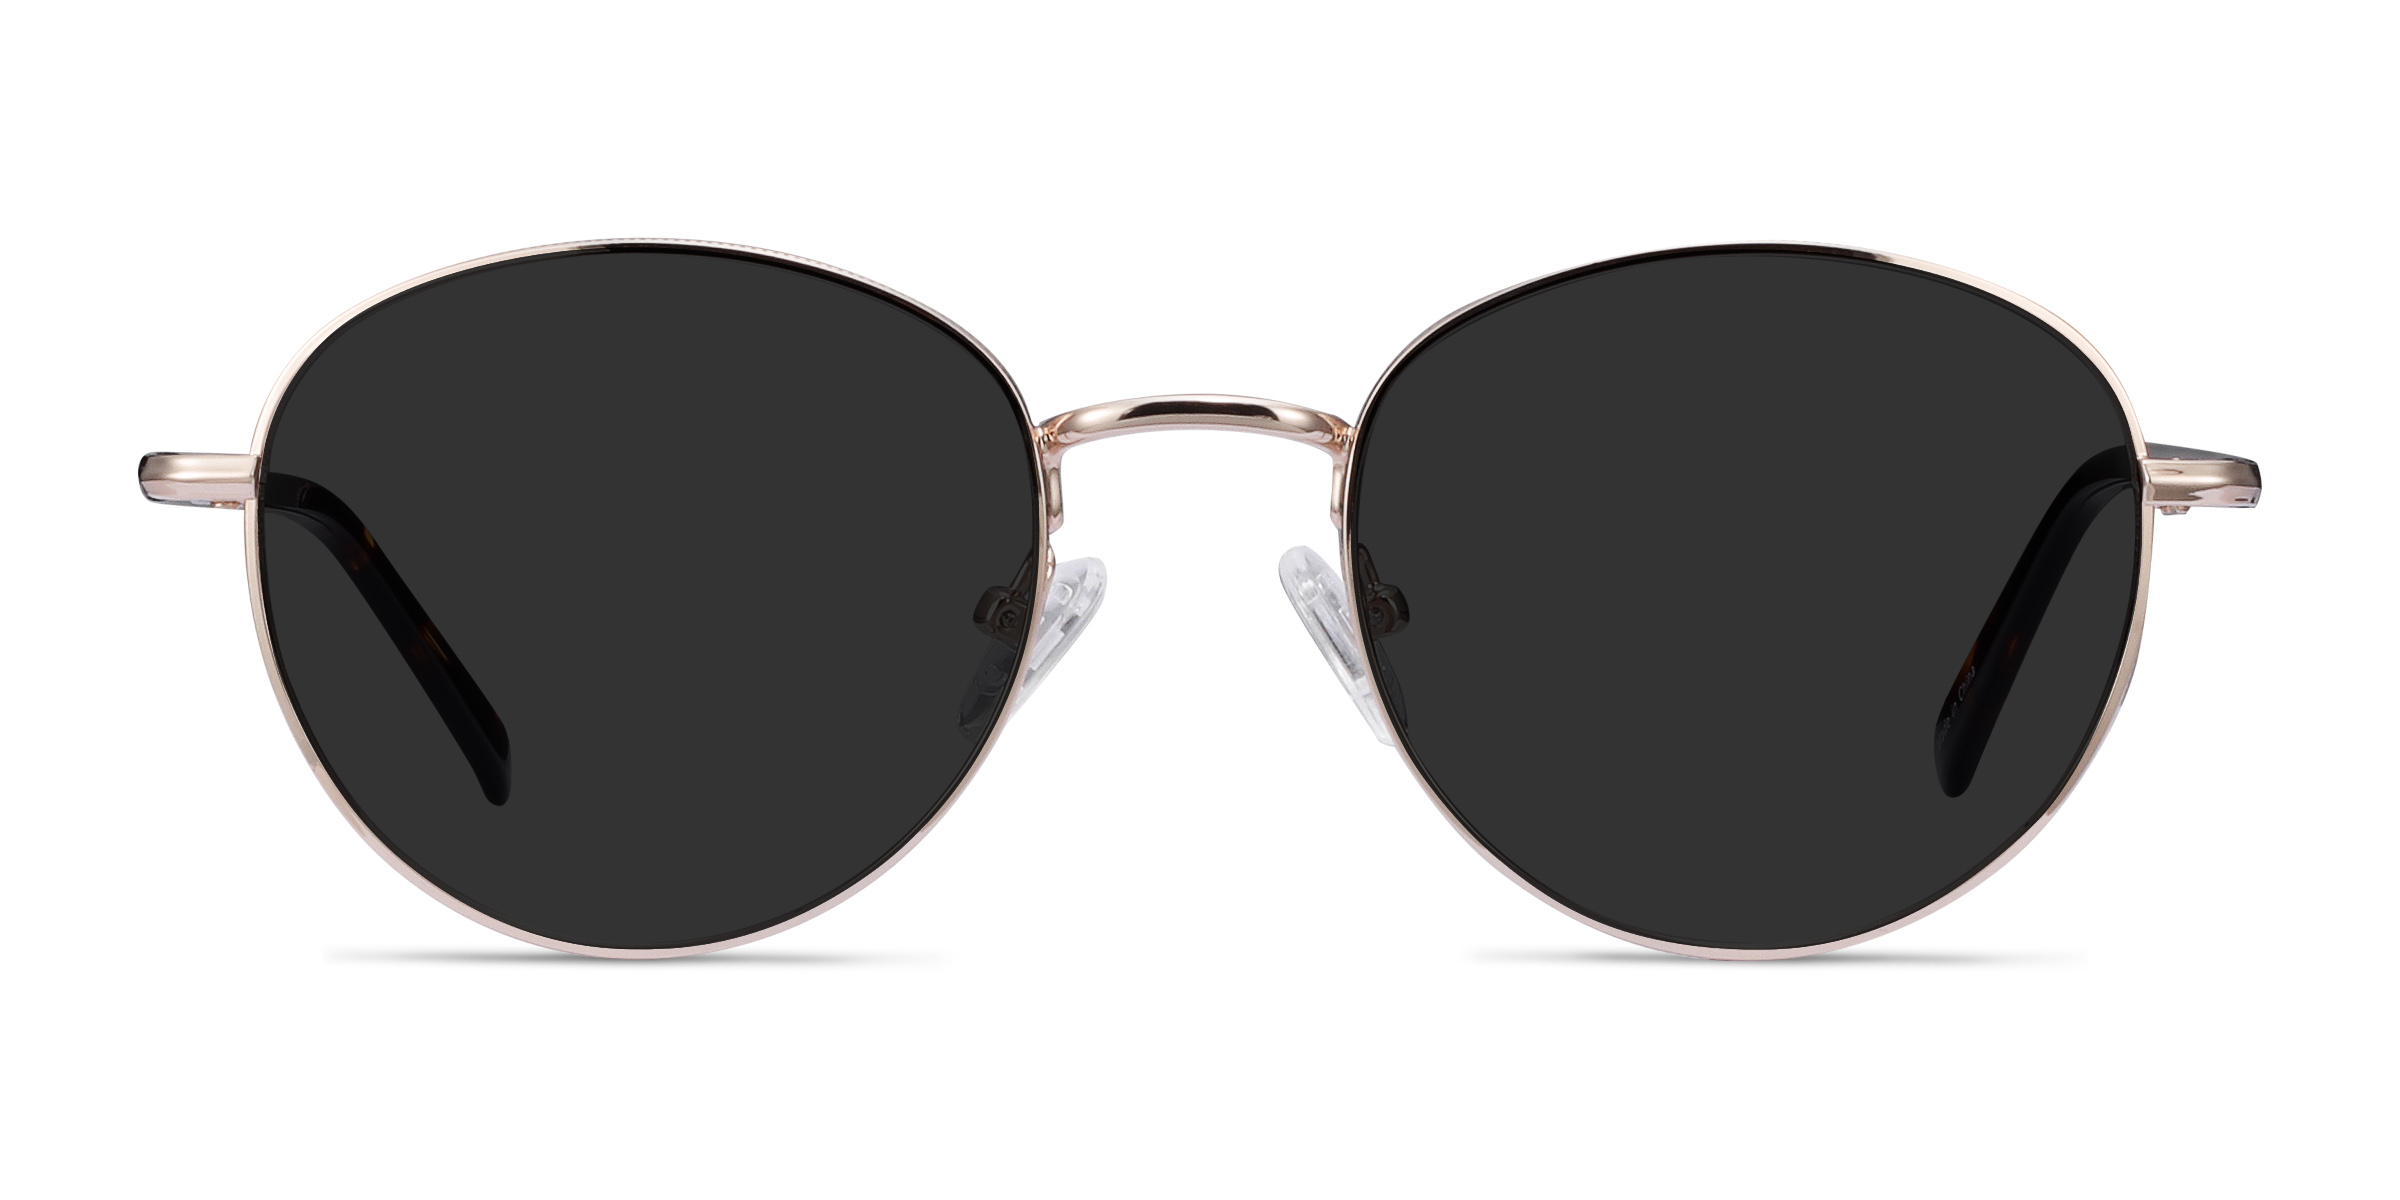 Span - Round Gold Frame Prescription Sunglasses | Eyebuydirect